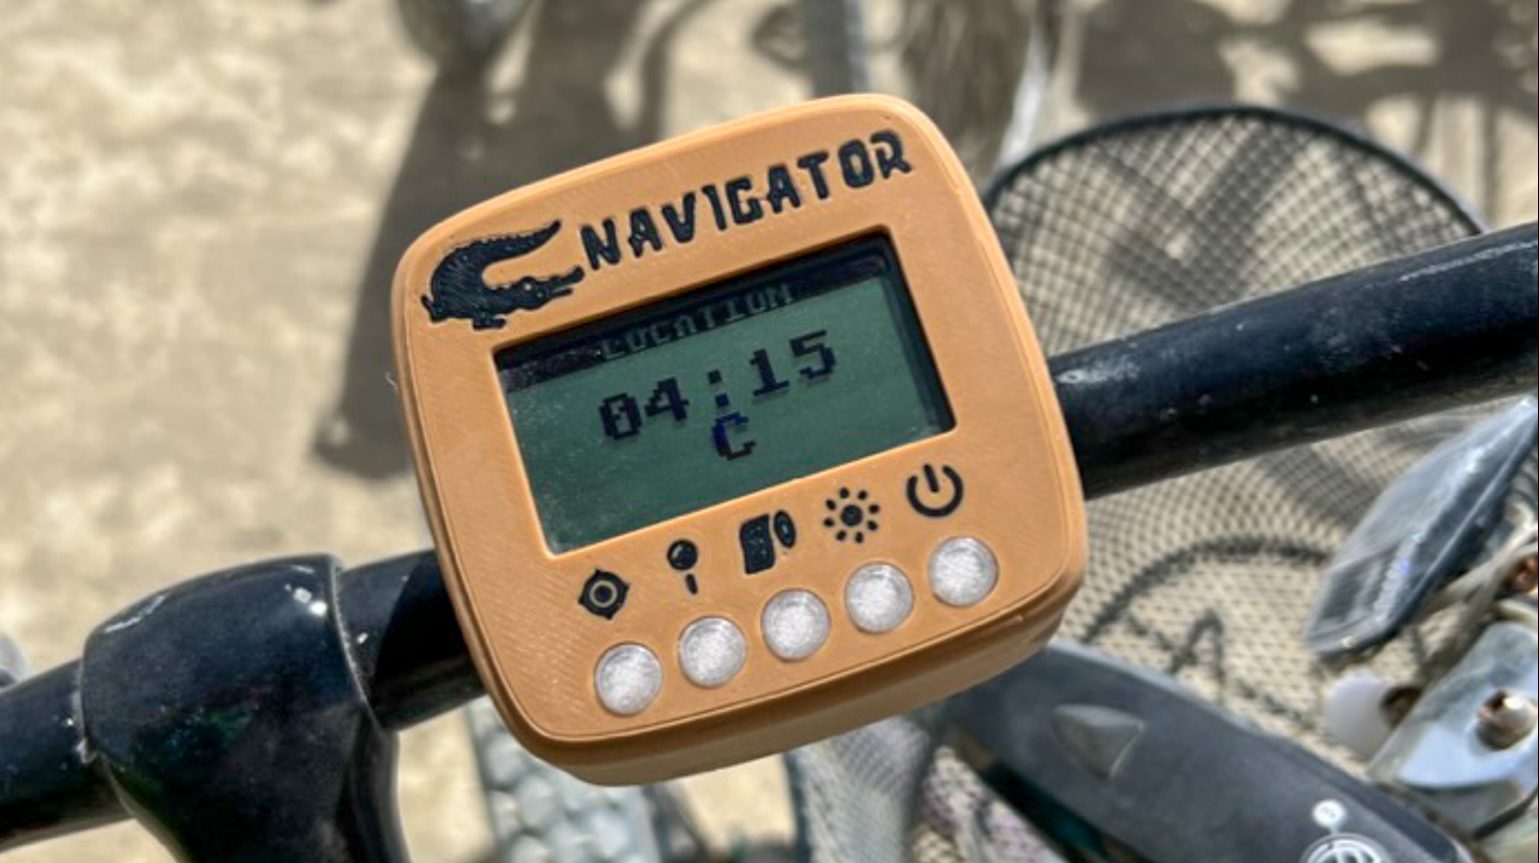 Playa navigator bike mounted e1706692770652